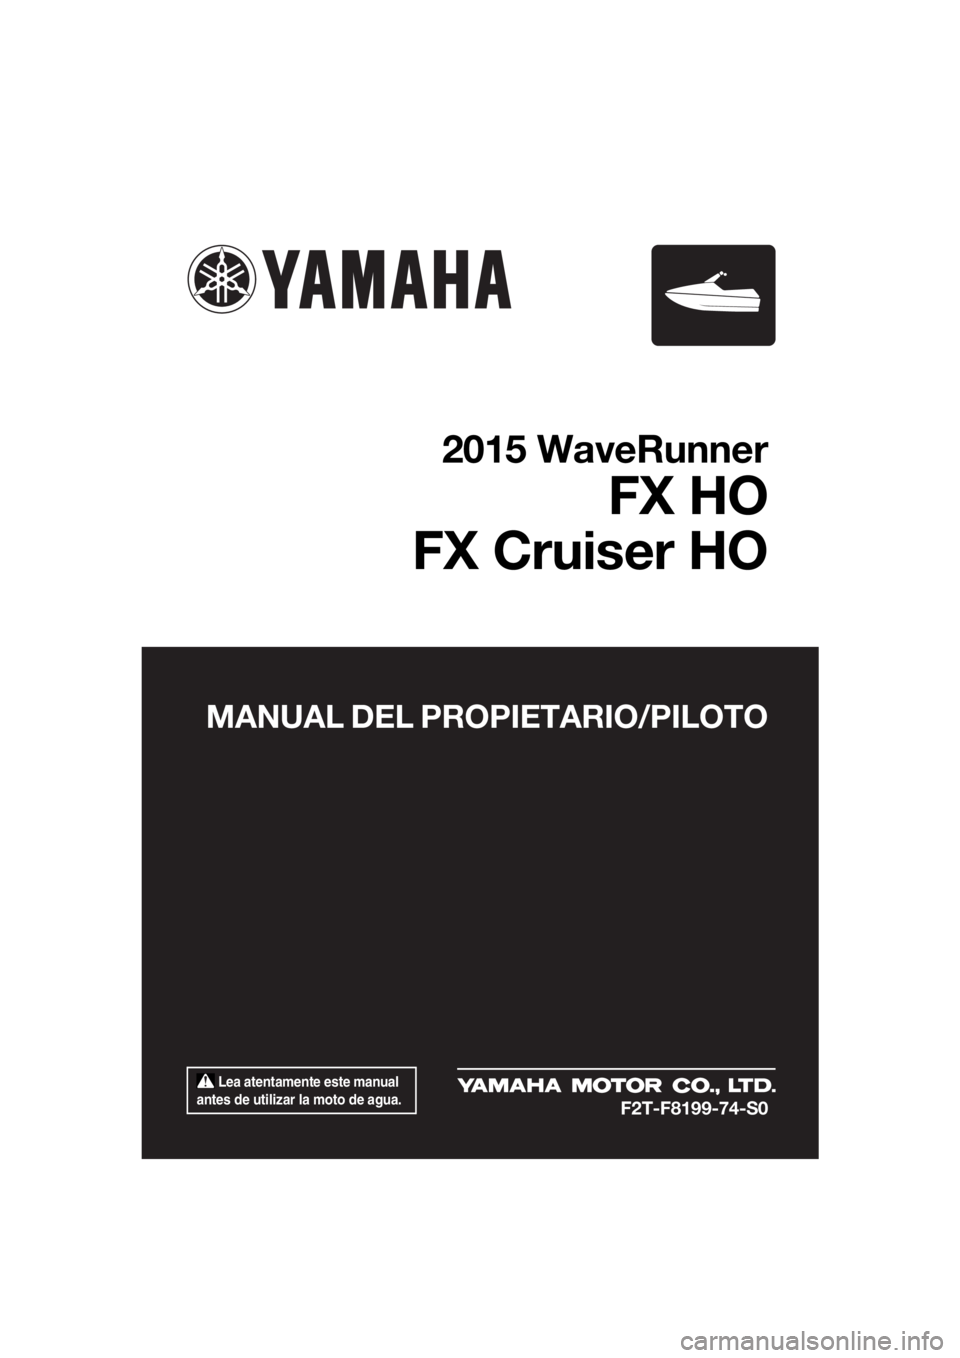 YAMAHA FX HO CRUISER 2015  Manuale de Empleo (in Spanish) 